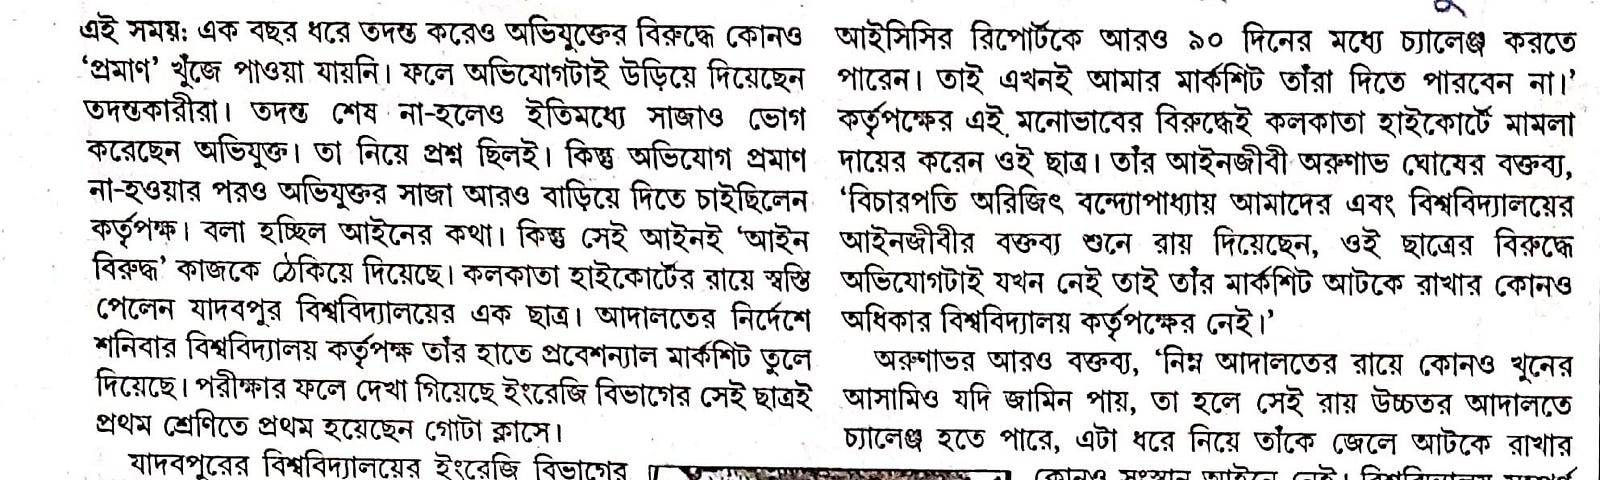 The Ekalavya Chaudhuri Jadavpur University case’s report published in a Bengali language newspaper.